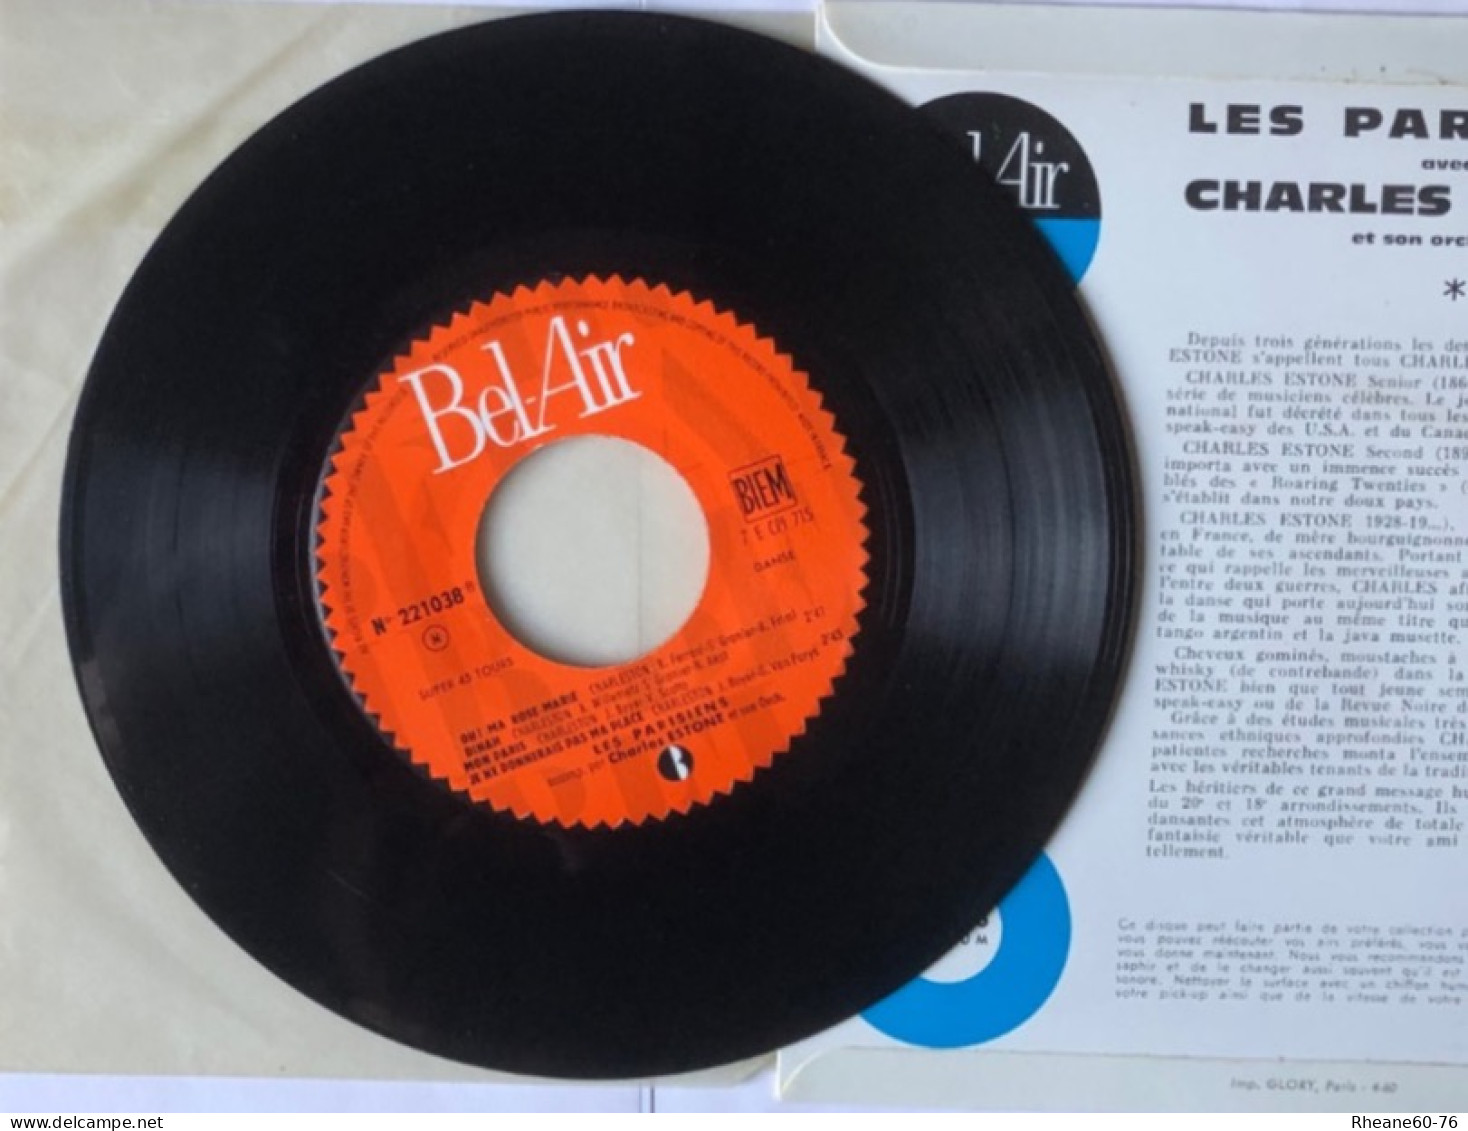 Bel-Air 221038 - 45T EP - Les Parisiens Avec Charles Estone Et Son Orchestre - Charleston - Formati Speciali